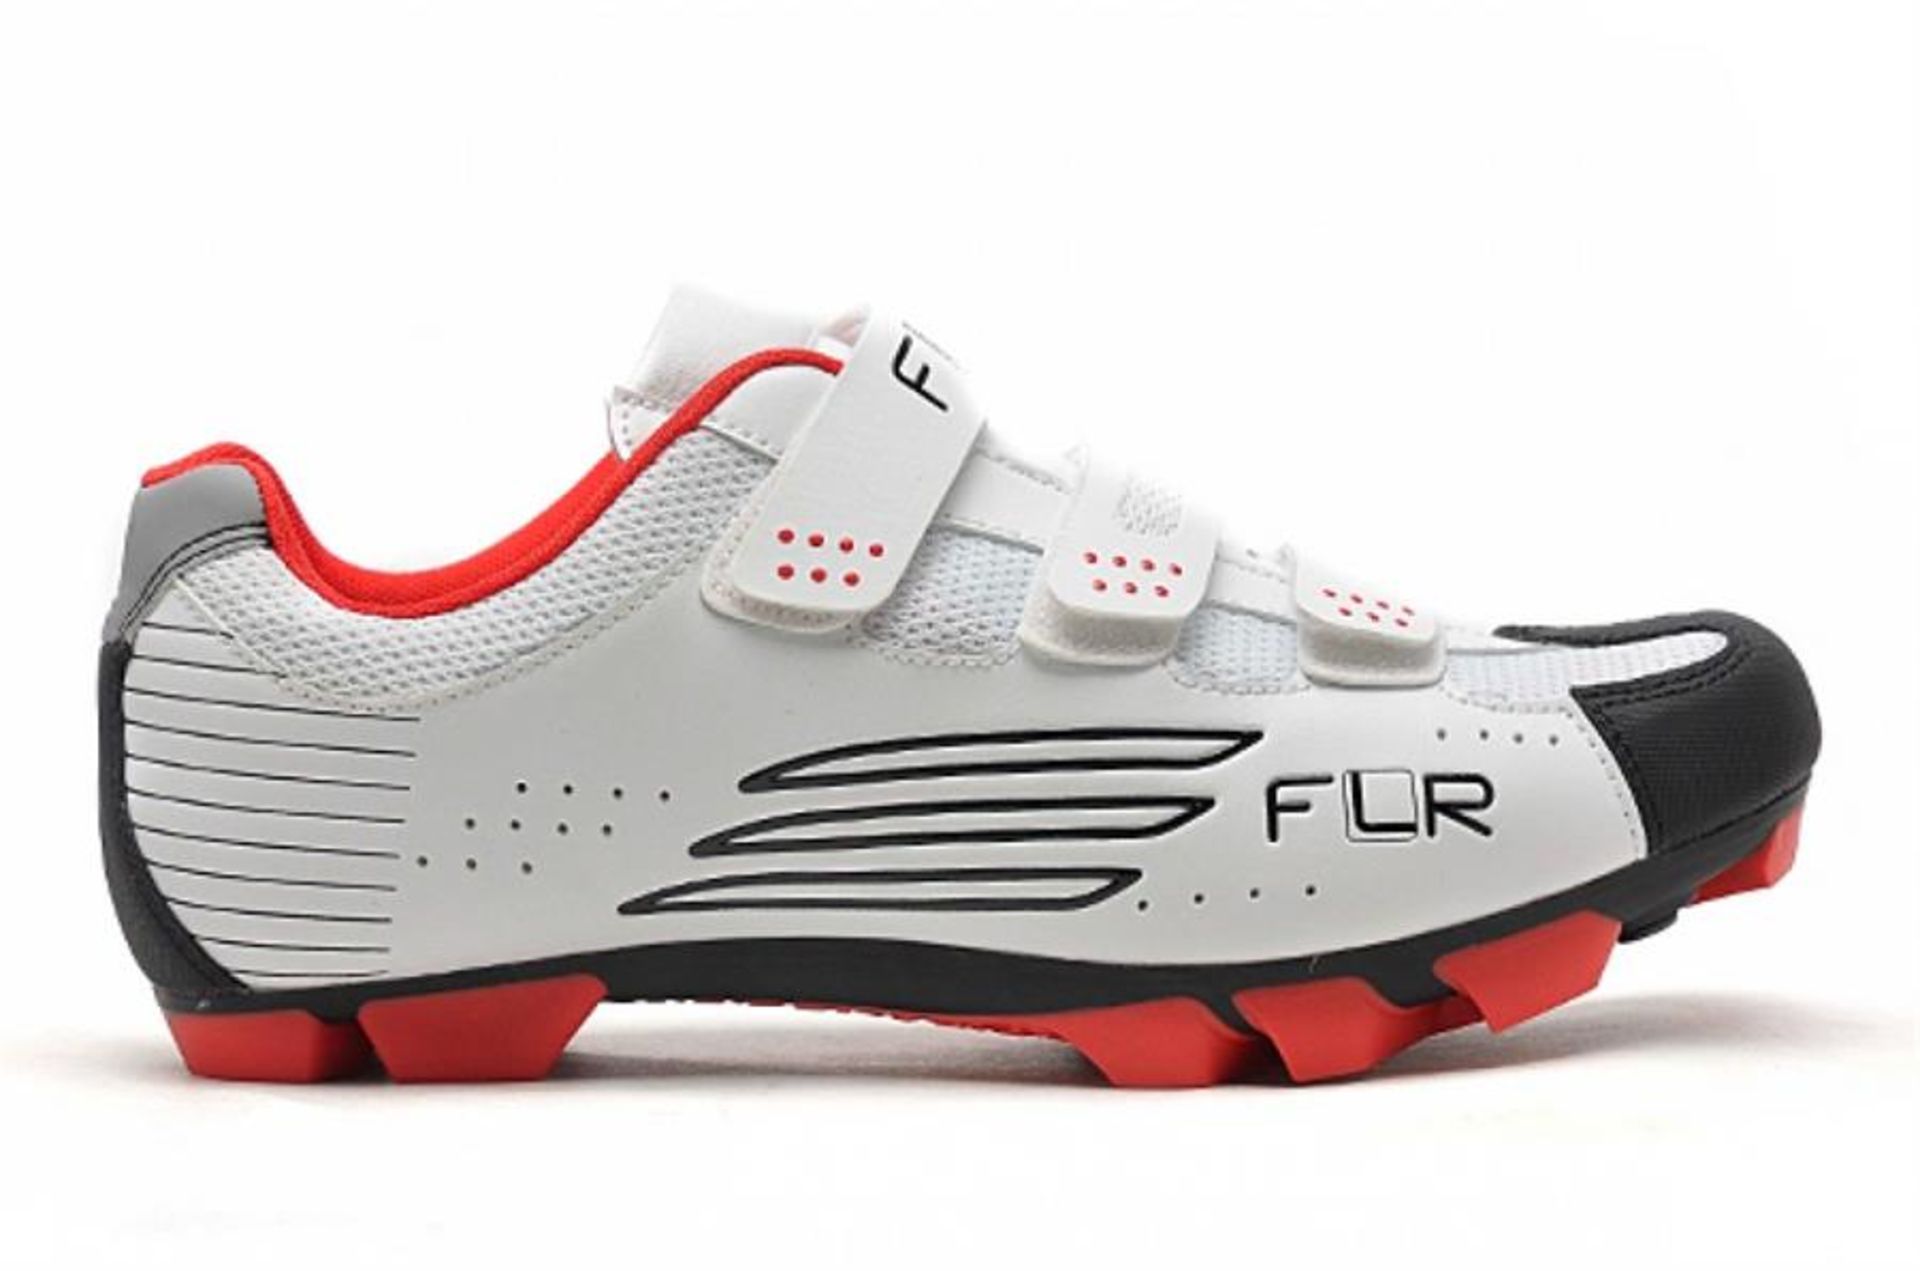 FLR F-35 II White Cycling Shoes UK7 RRP £59.99